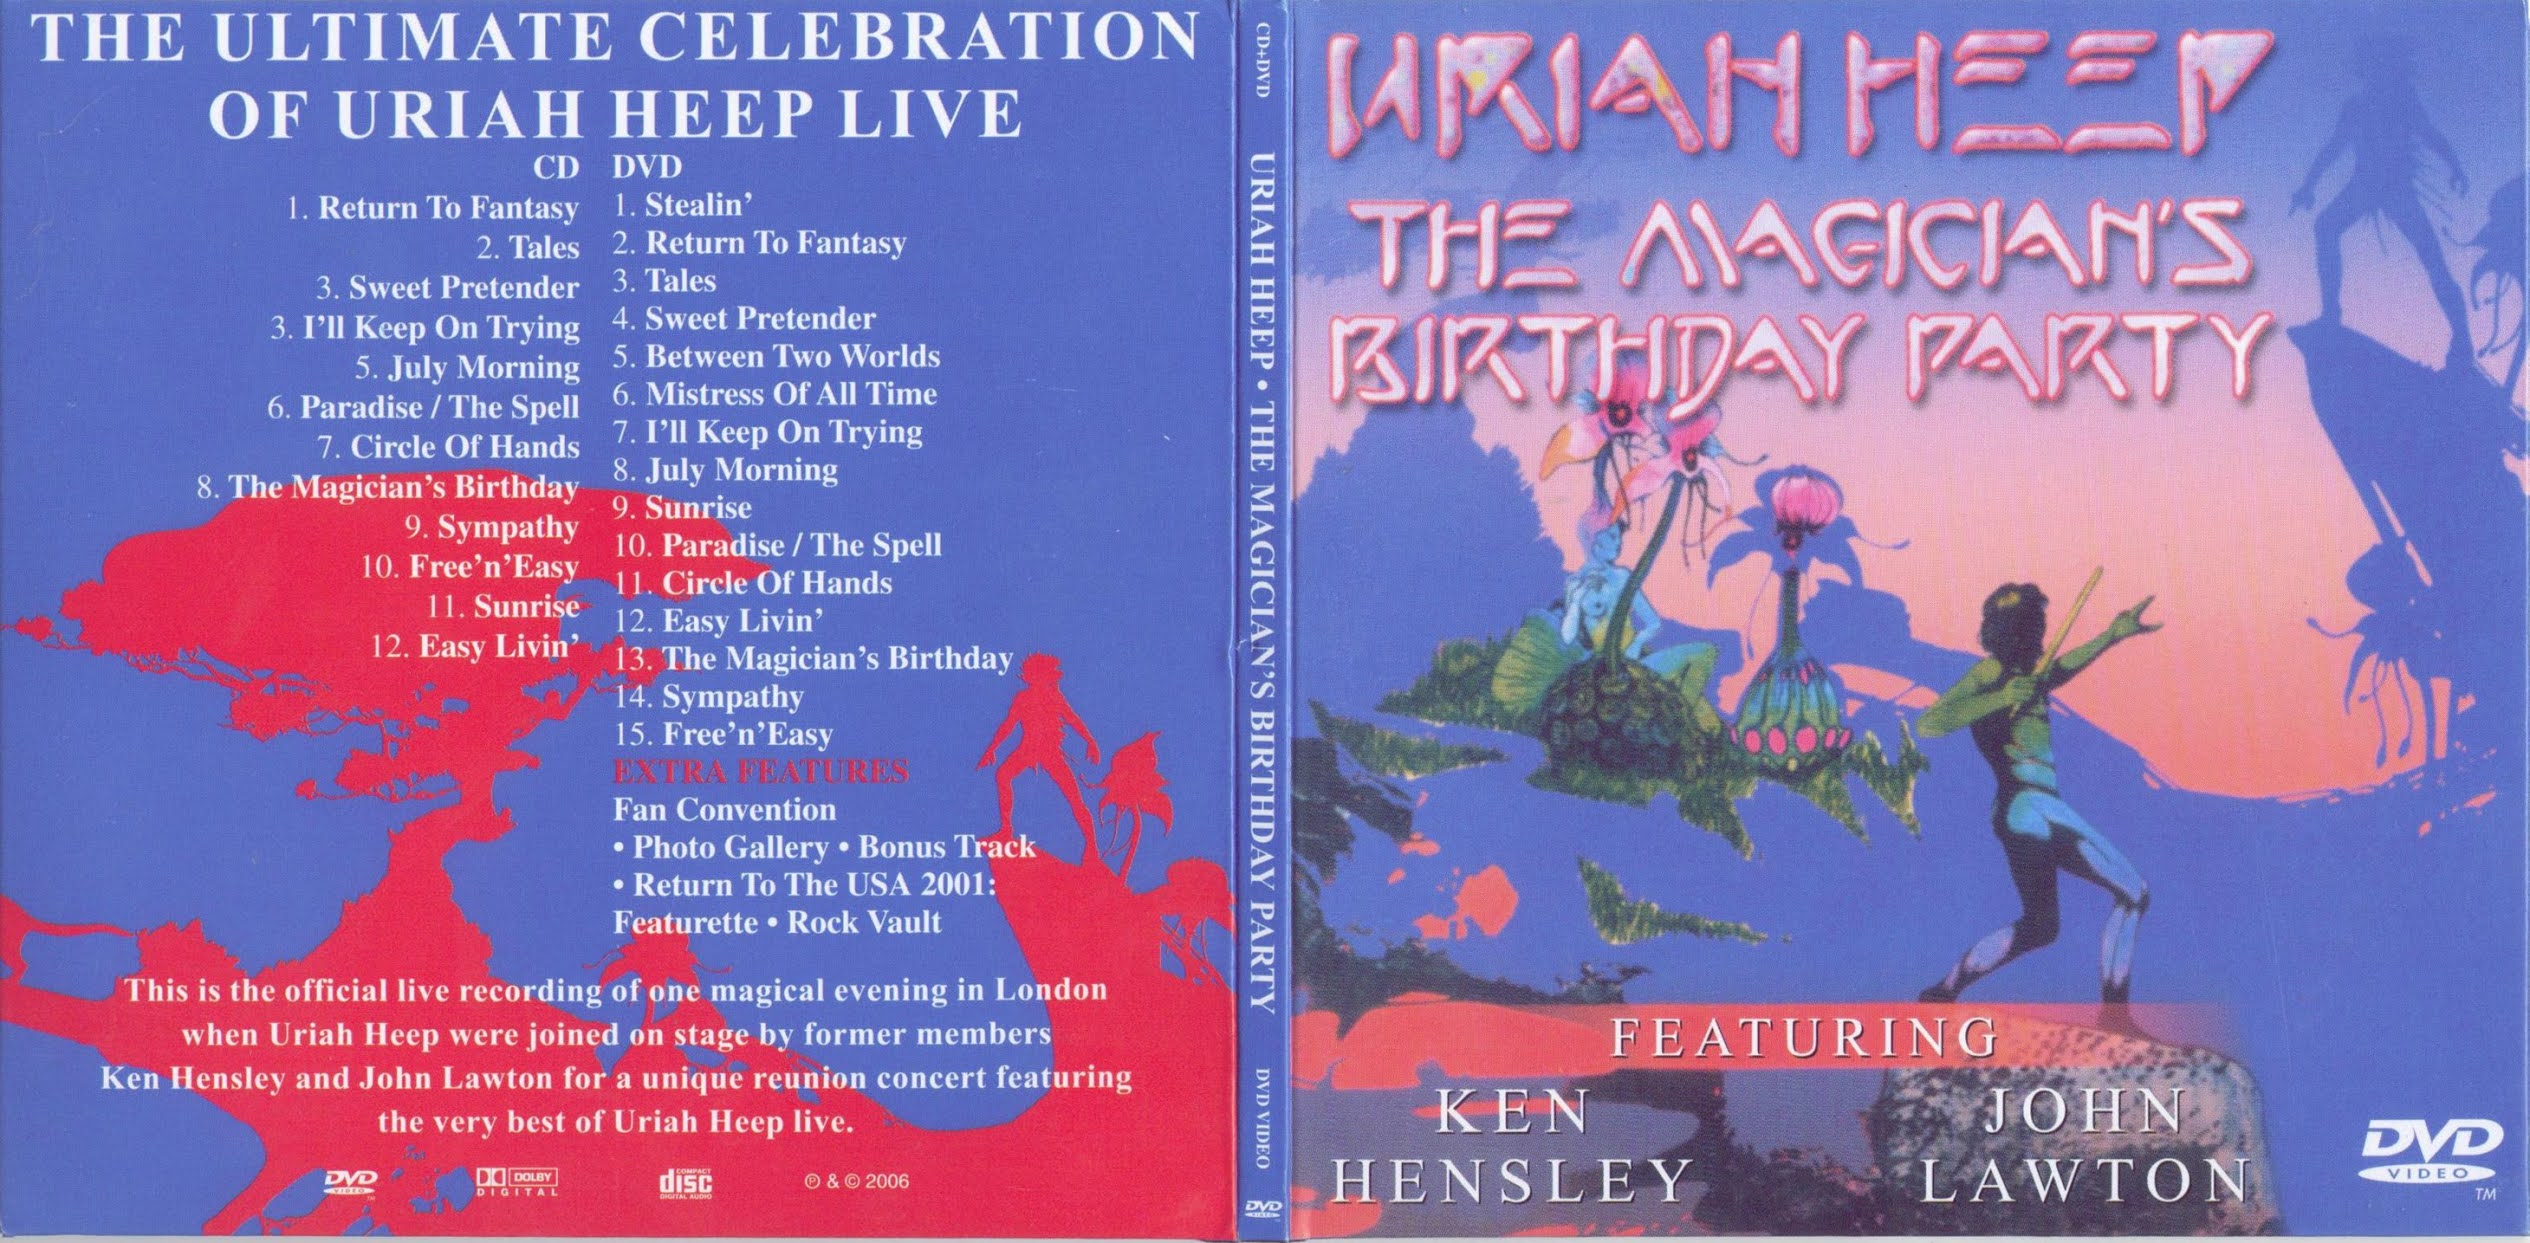 The magician s birthday. Uriah Heep the Magician's Birthday 1972. The Magician's Birthday Party Uriah Heep. Uriah Heep the Magician's Birthday обложка. Uriah Heep the Magicians Birthday 1972 обложка.